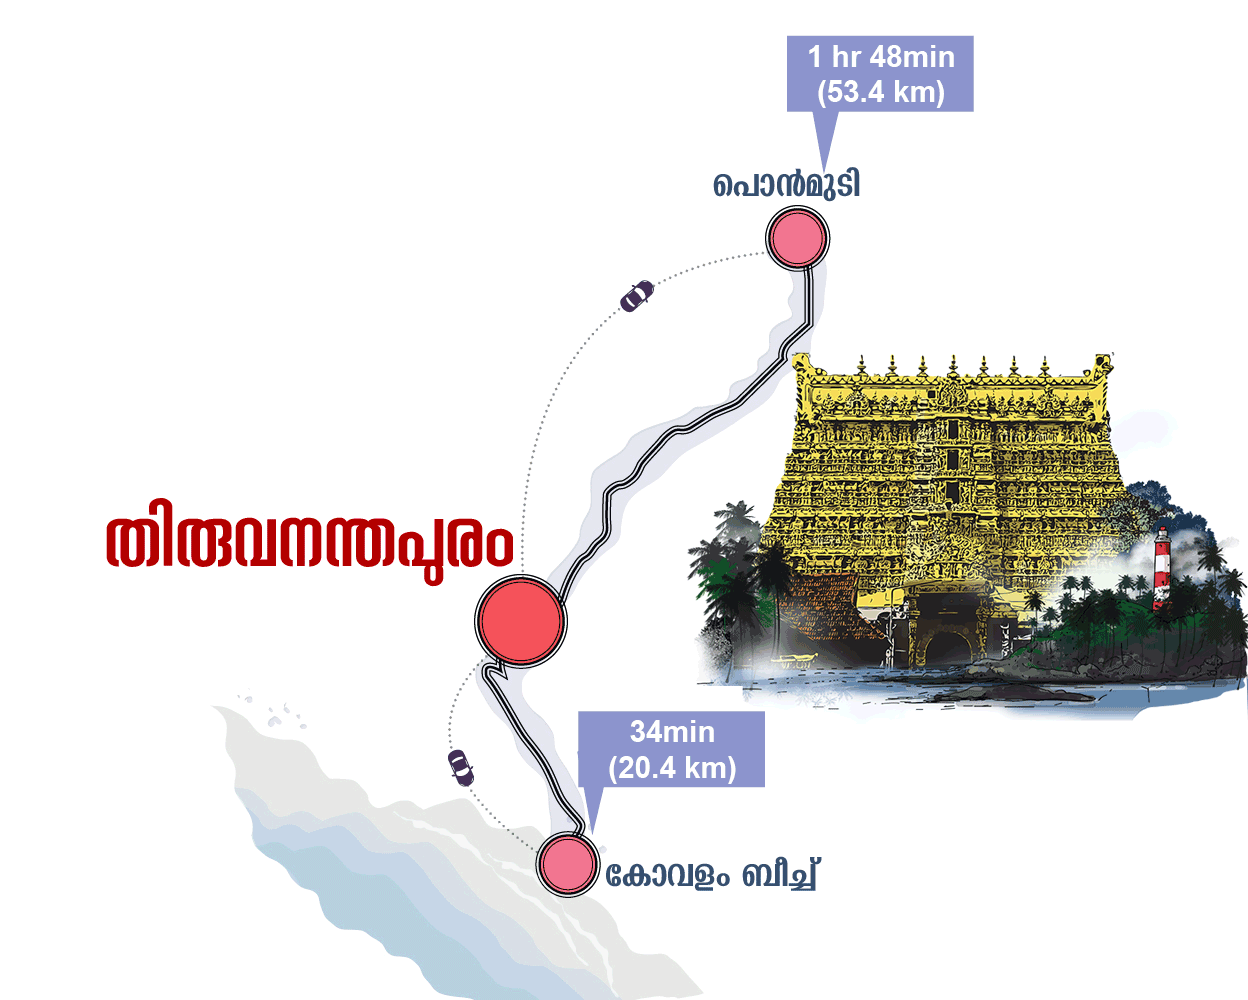 Info_Card_Travel_Weekend_Special_Thiruvananthapuram_mob